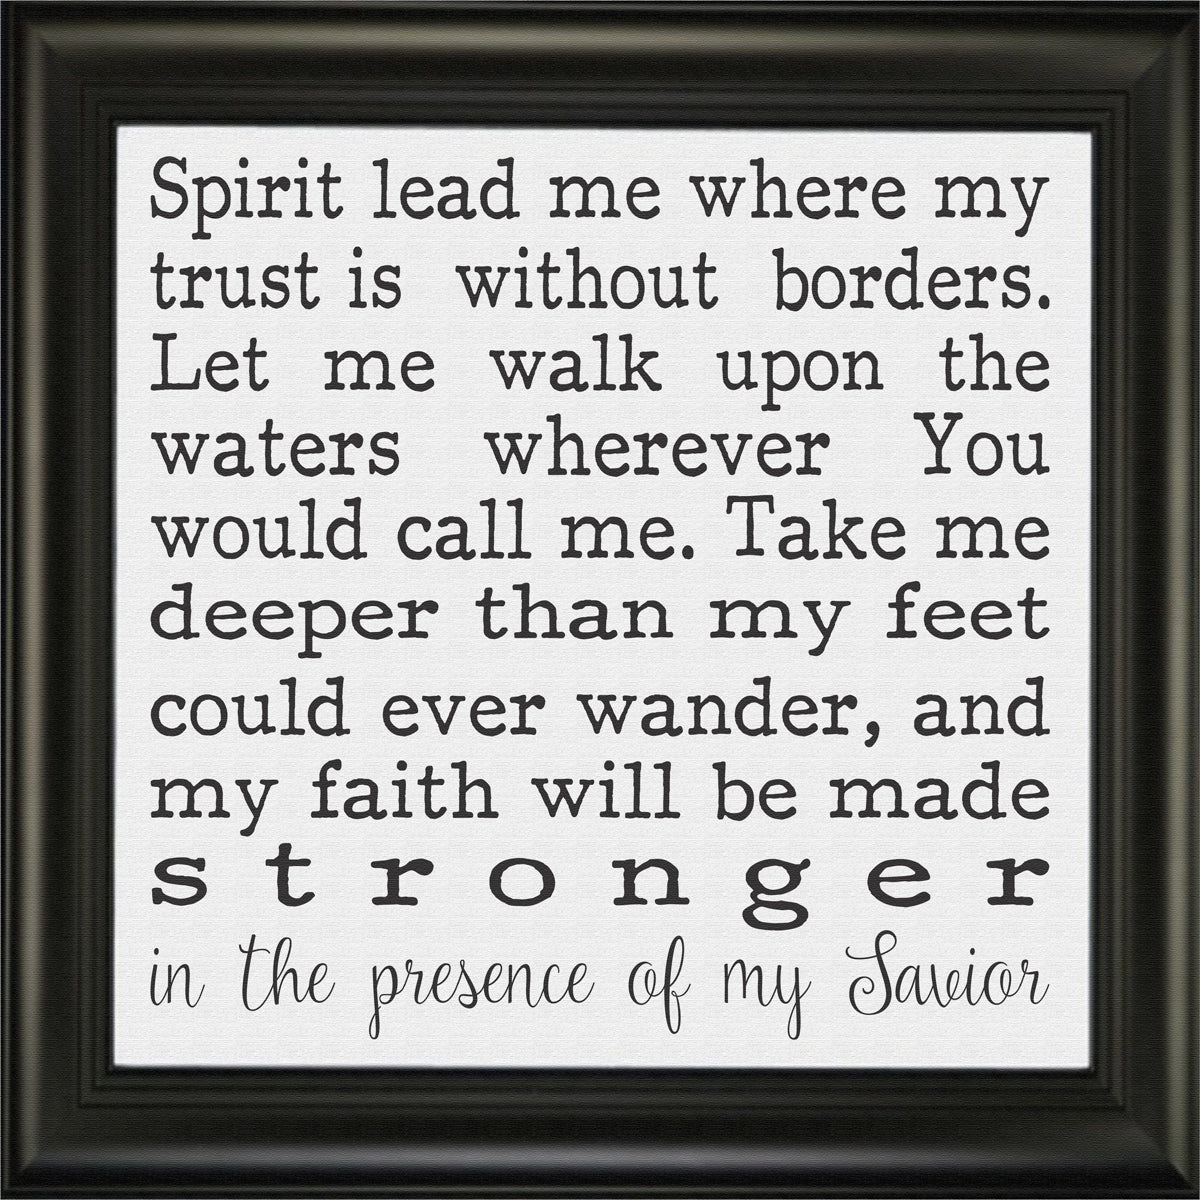 Spirit lead me in the presence of my Savior Stencil - Superior Stencils